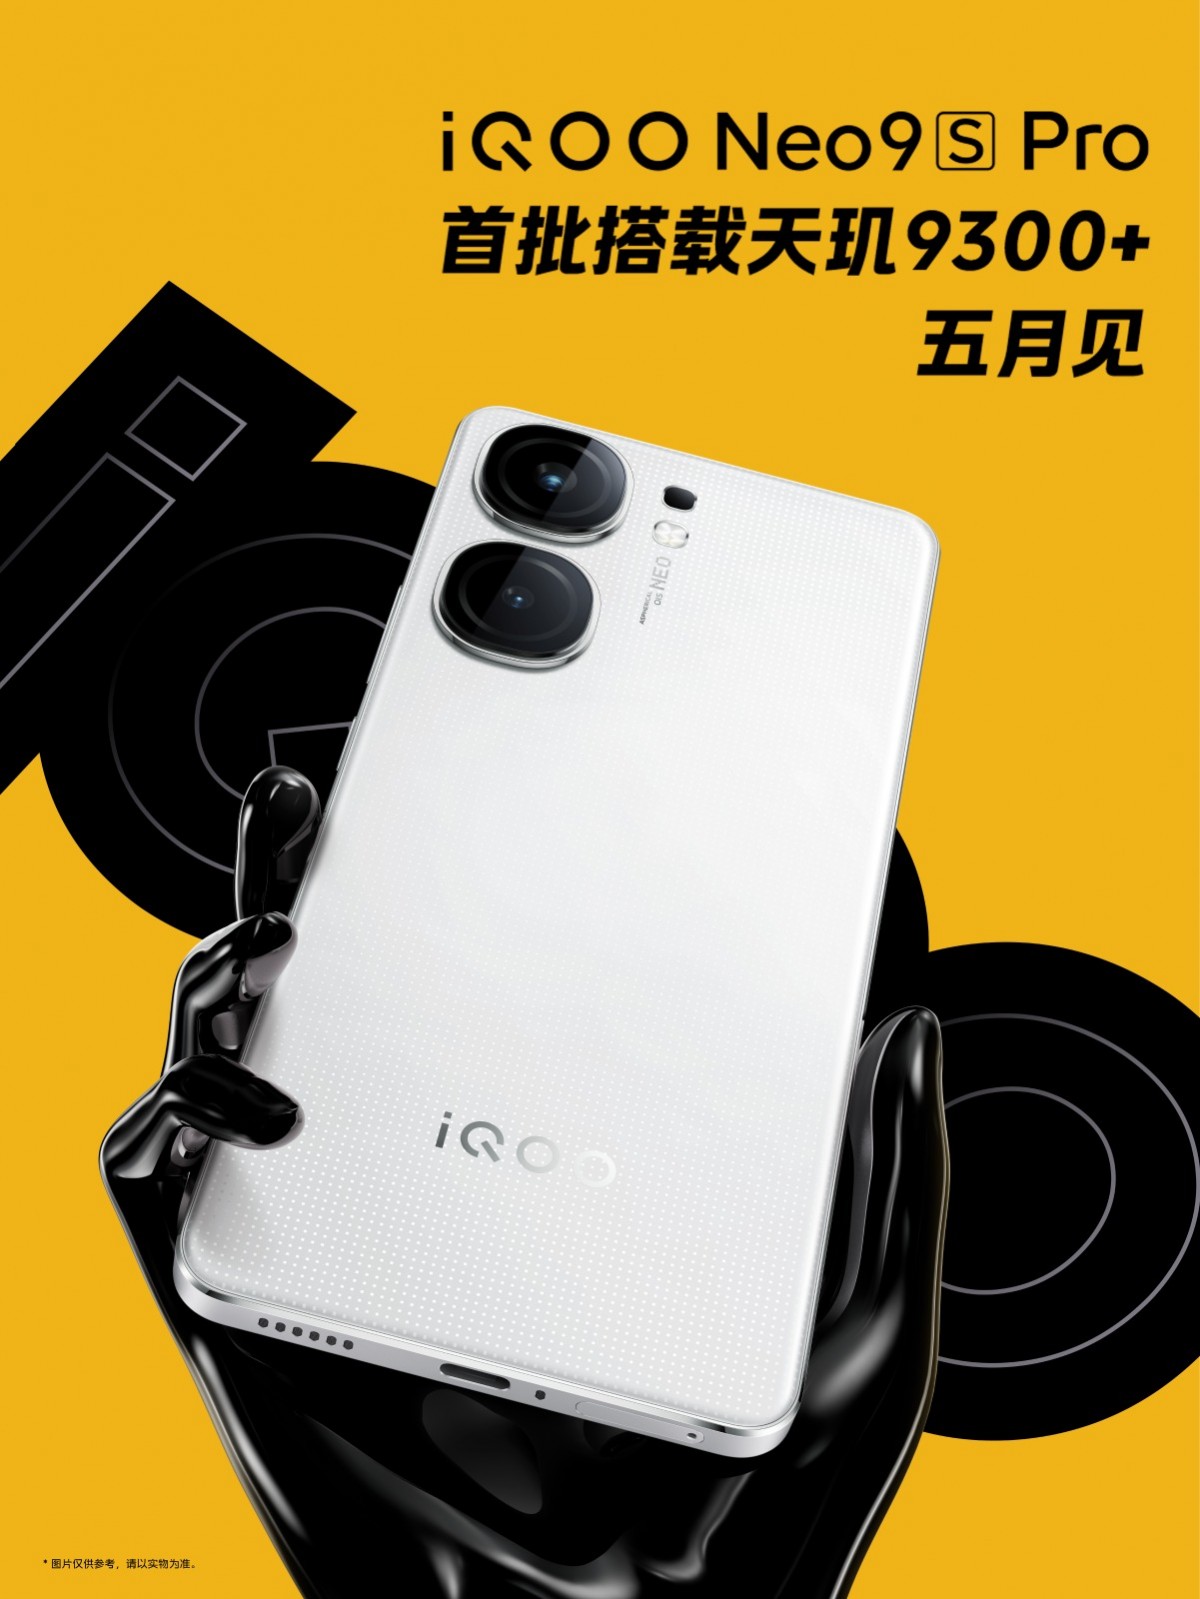 vivo to launch iQOO Neo 9S Pro with Dimensity 9300+